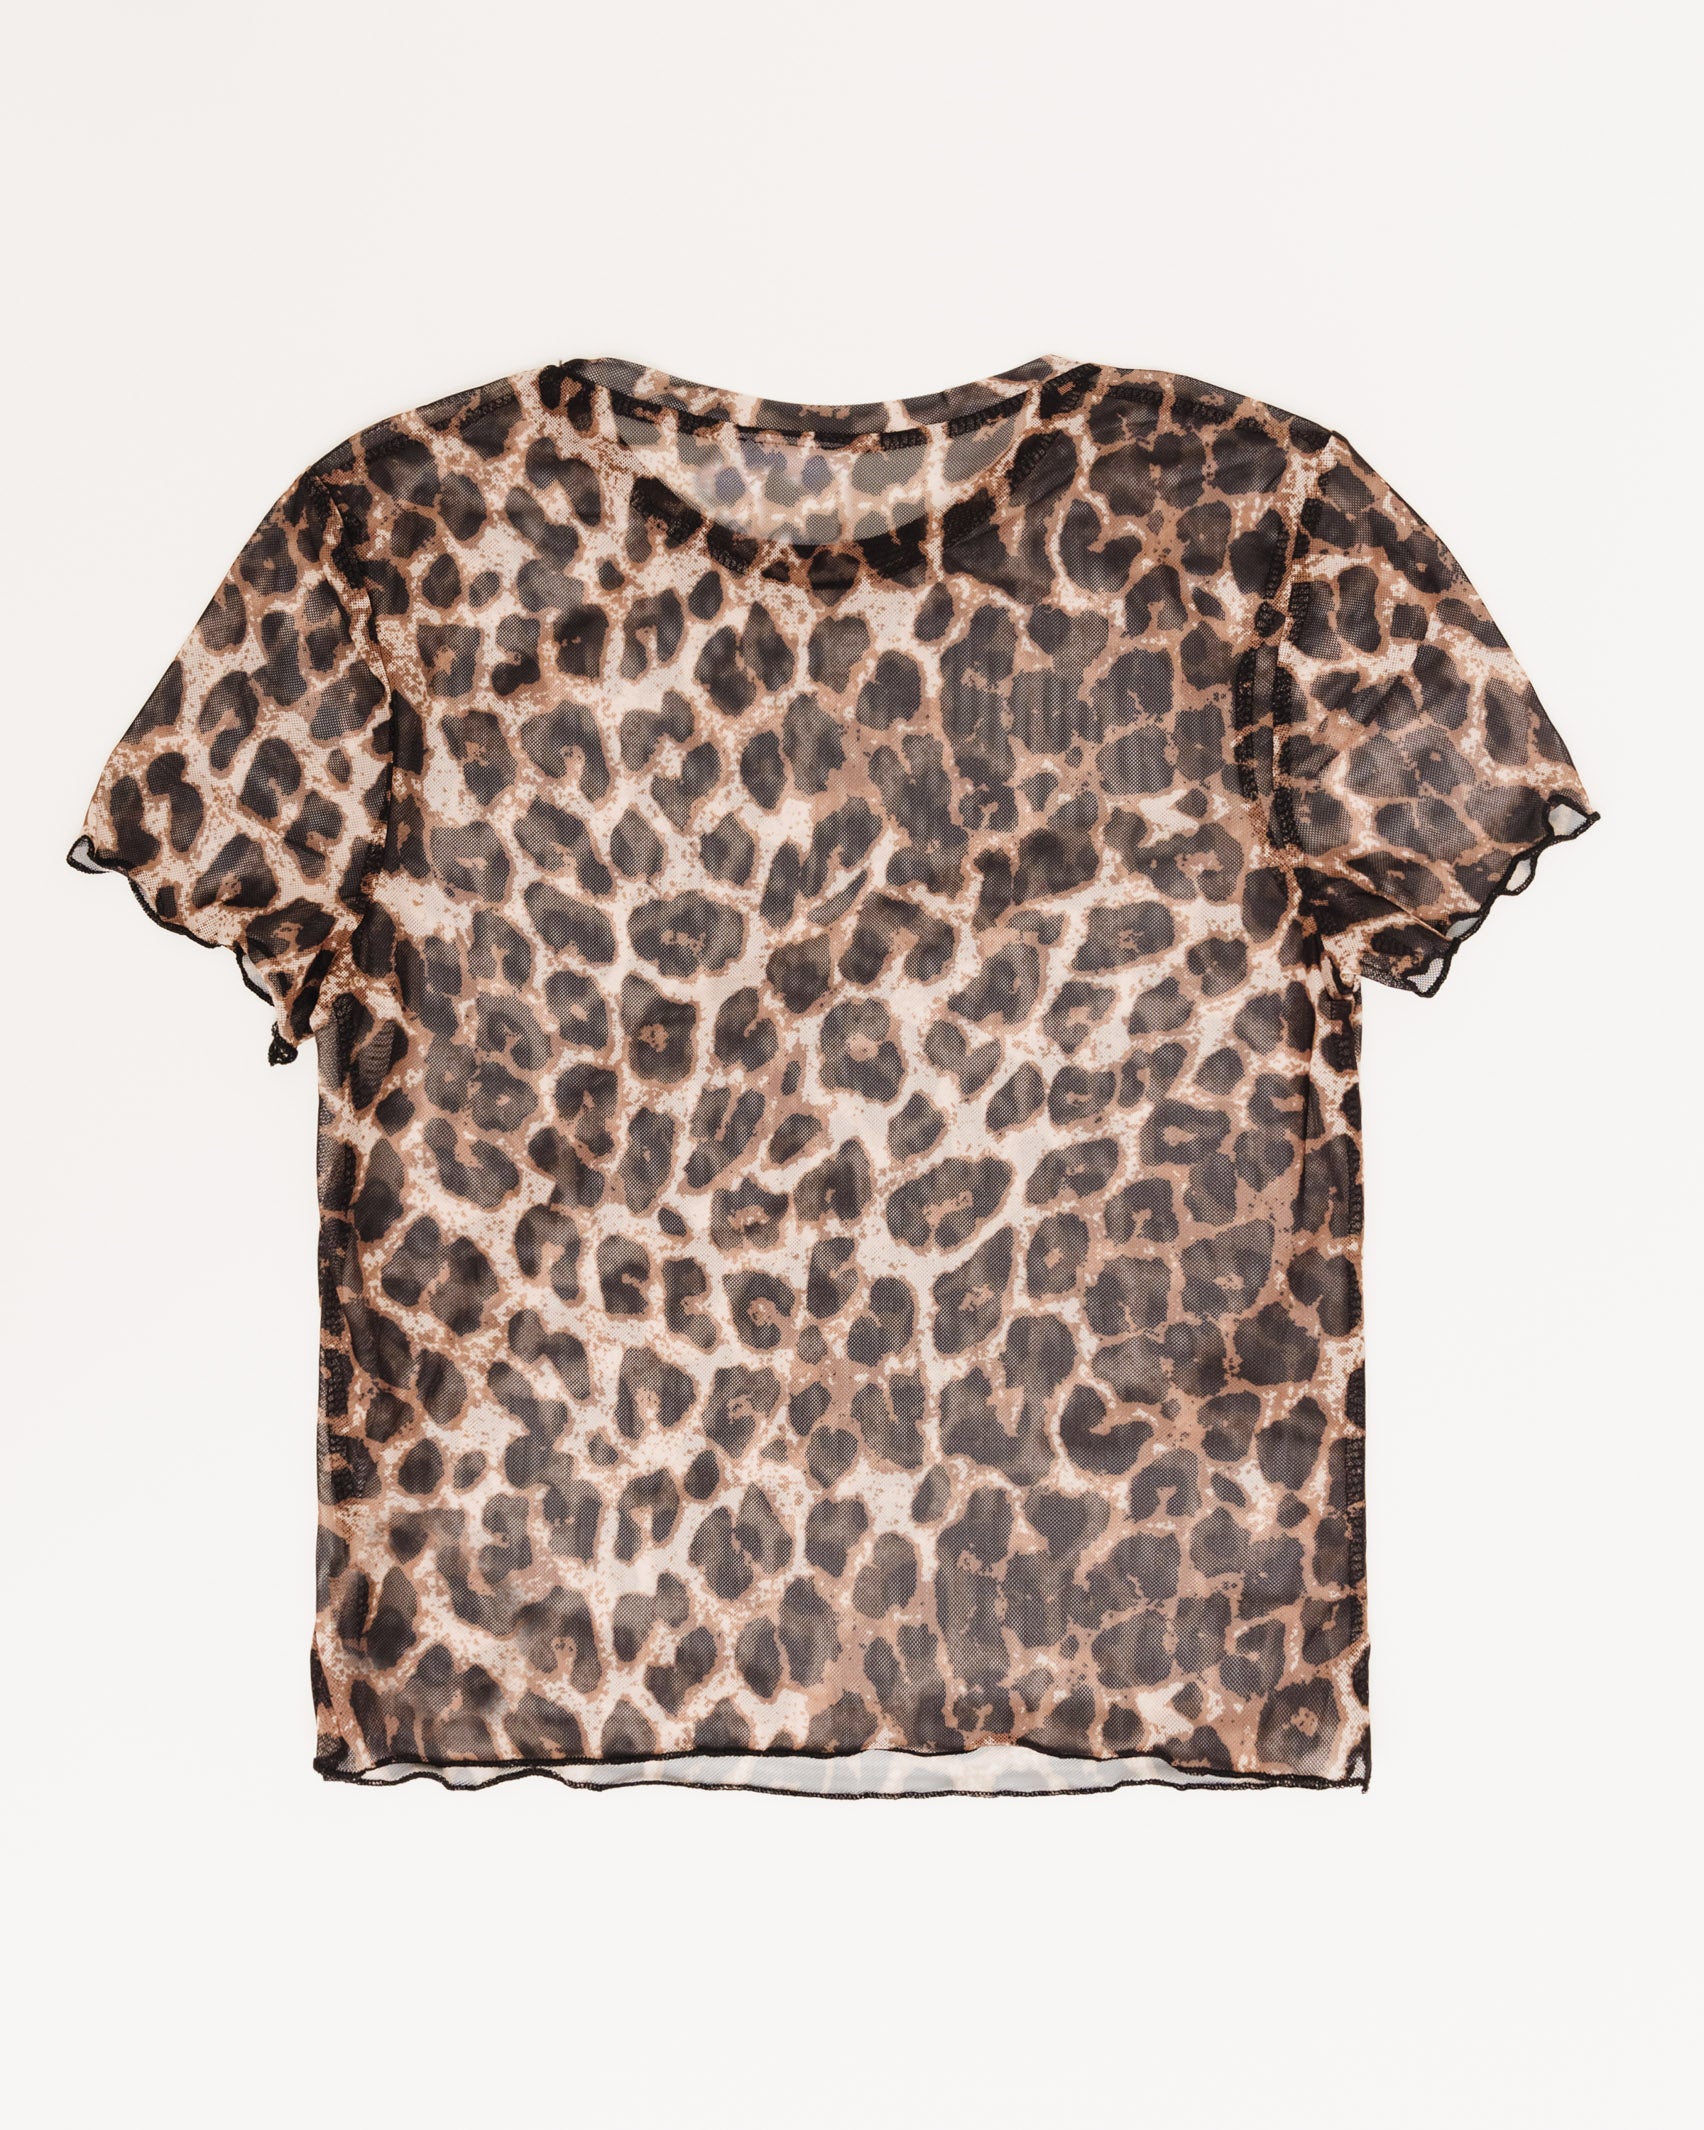 Mesh T-Shirt in Leoparden Muster - Broke + Schön